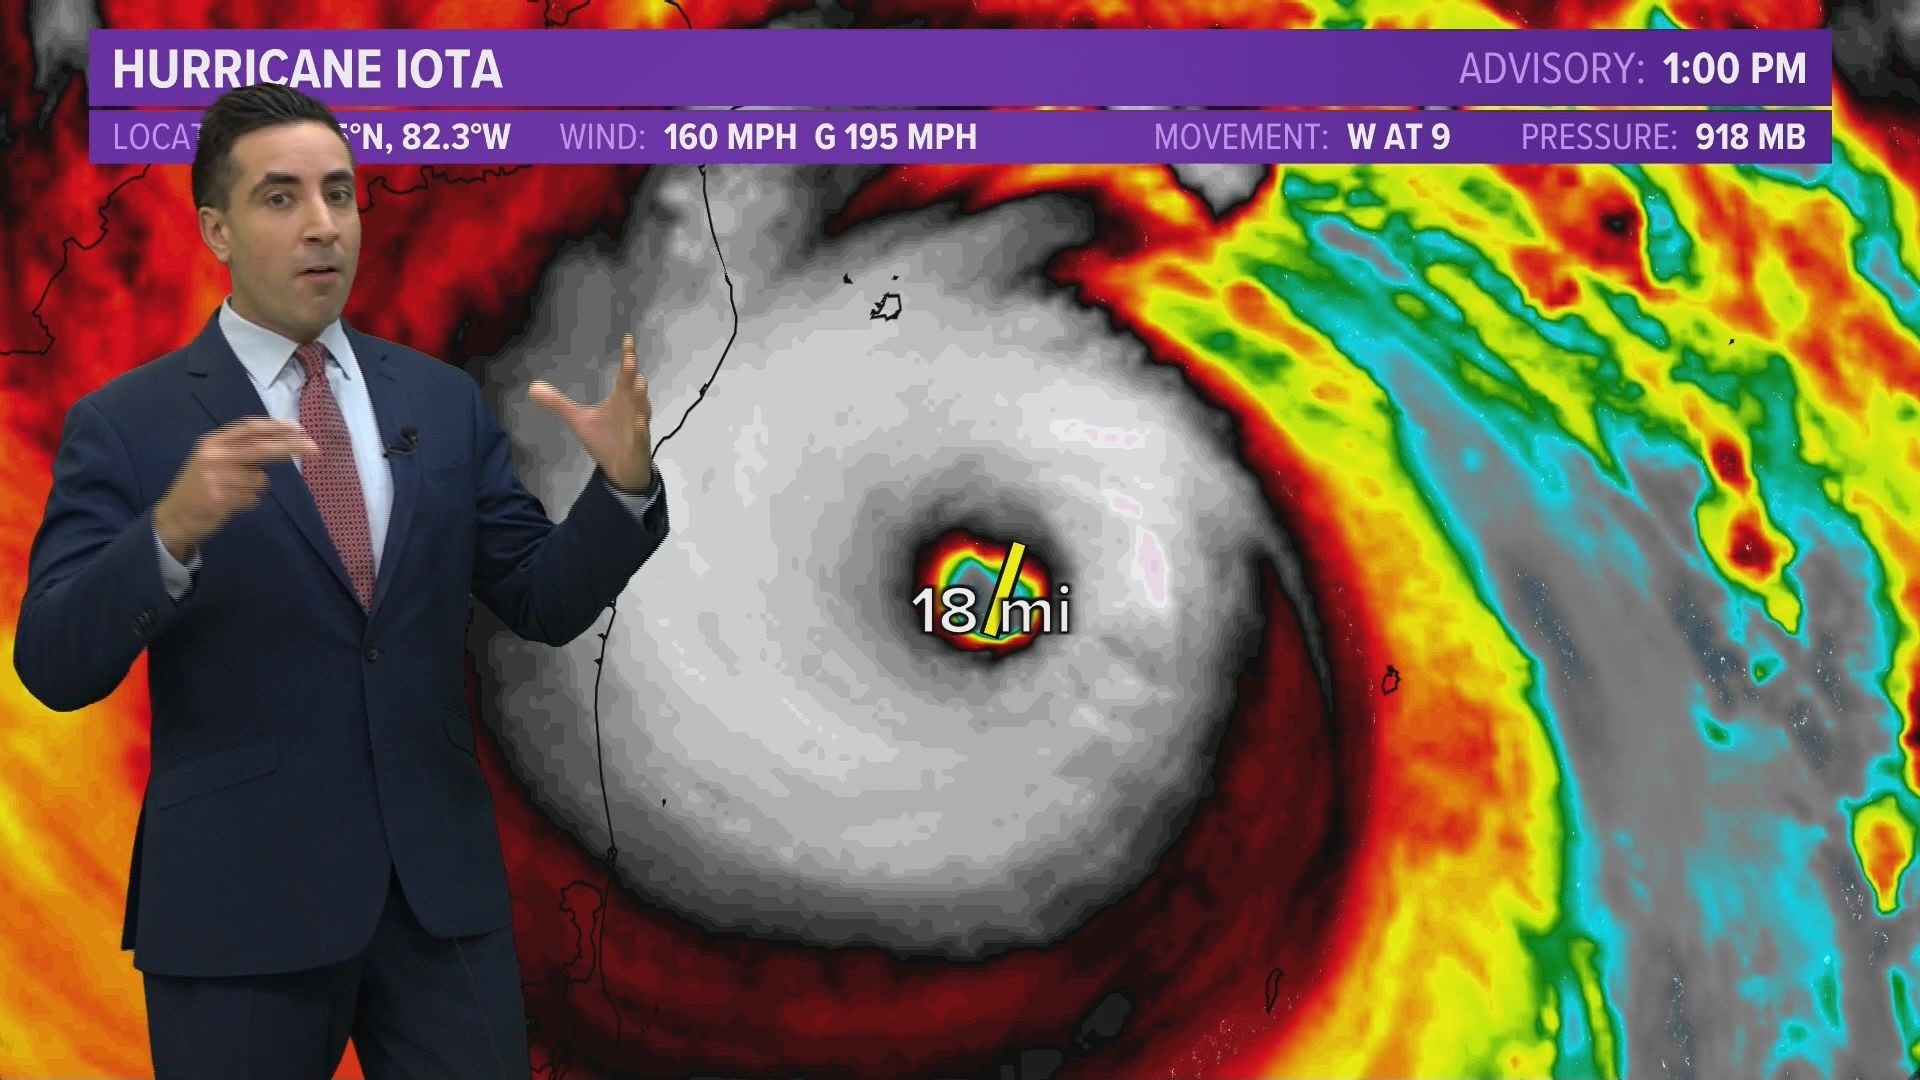 13News Now meteorologist Tim Pandajis has the latest on Hurricane Iota.